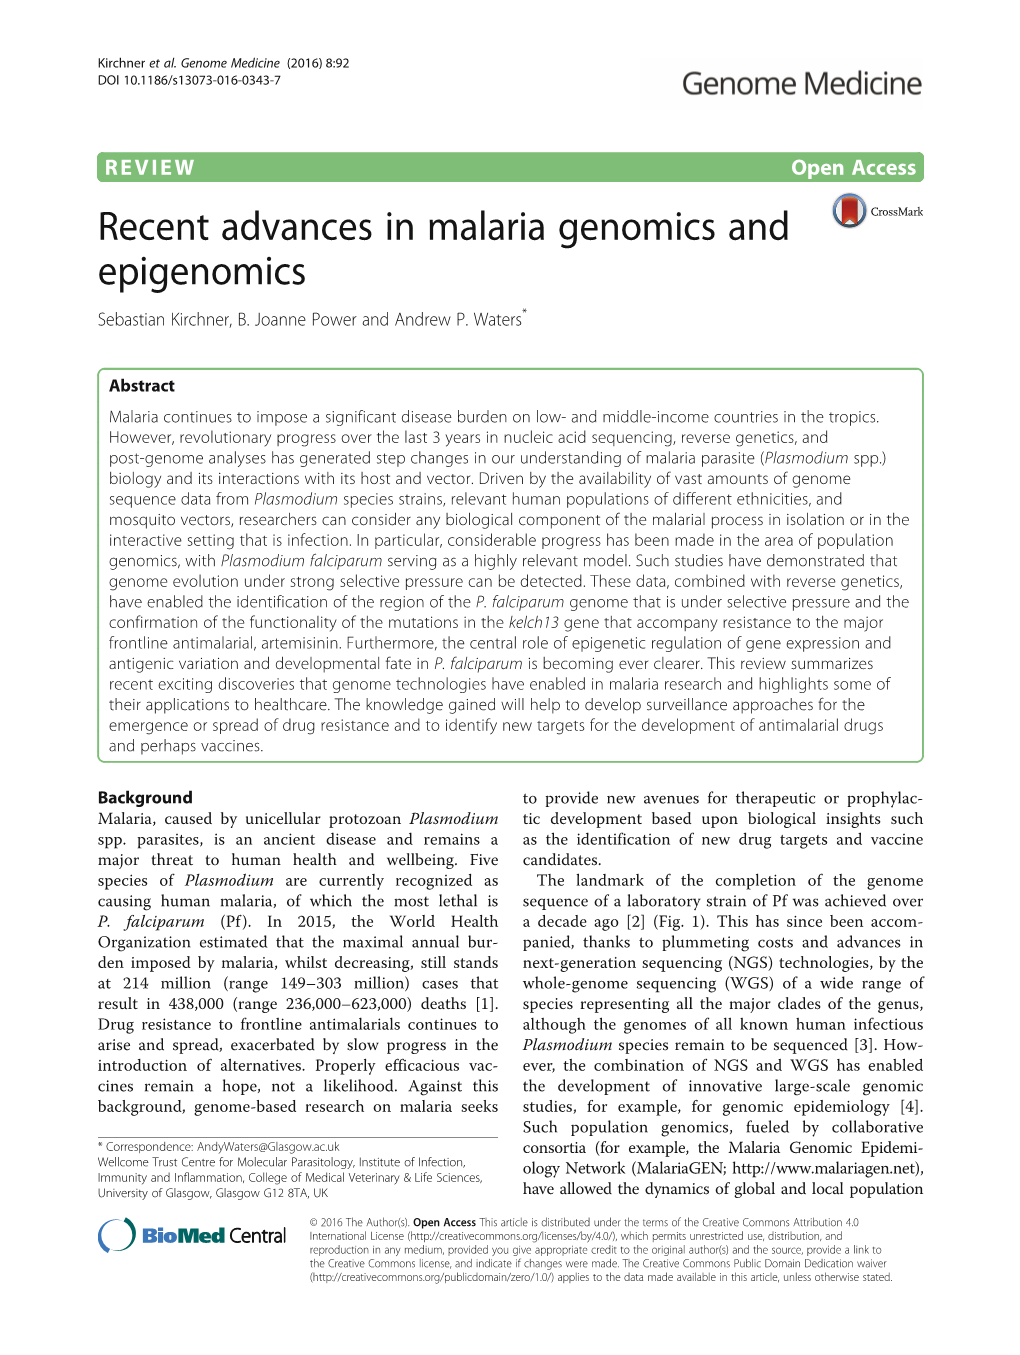 Recent Advances in Malaria Genomics and Epigenomics Sebastian Kirchner, B